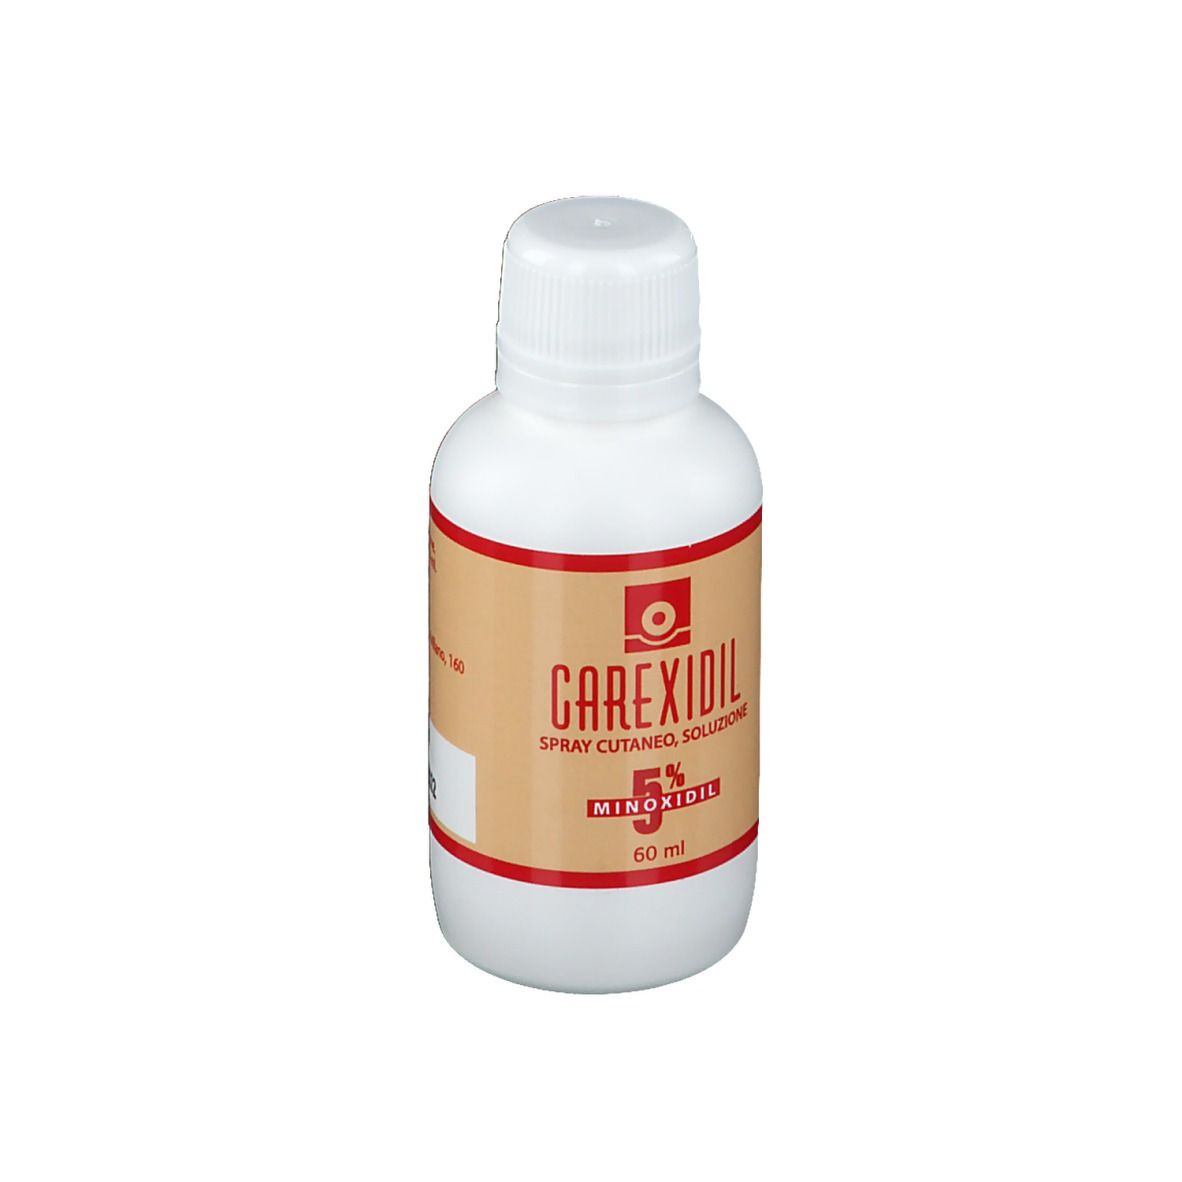 CAREXIDIL 5% spray cutaneo